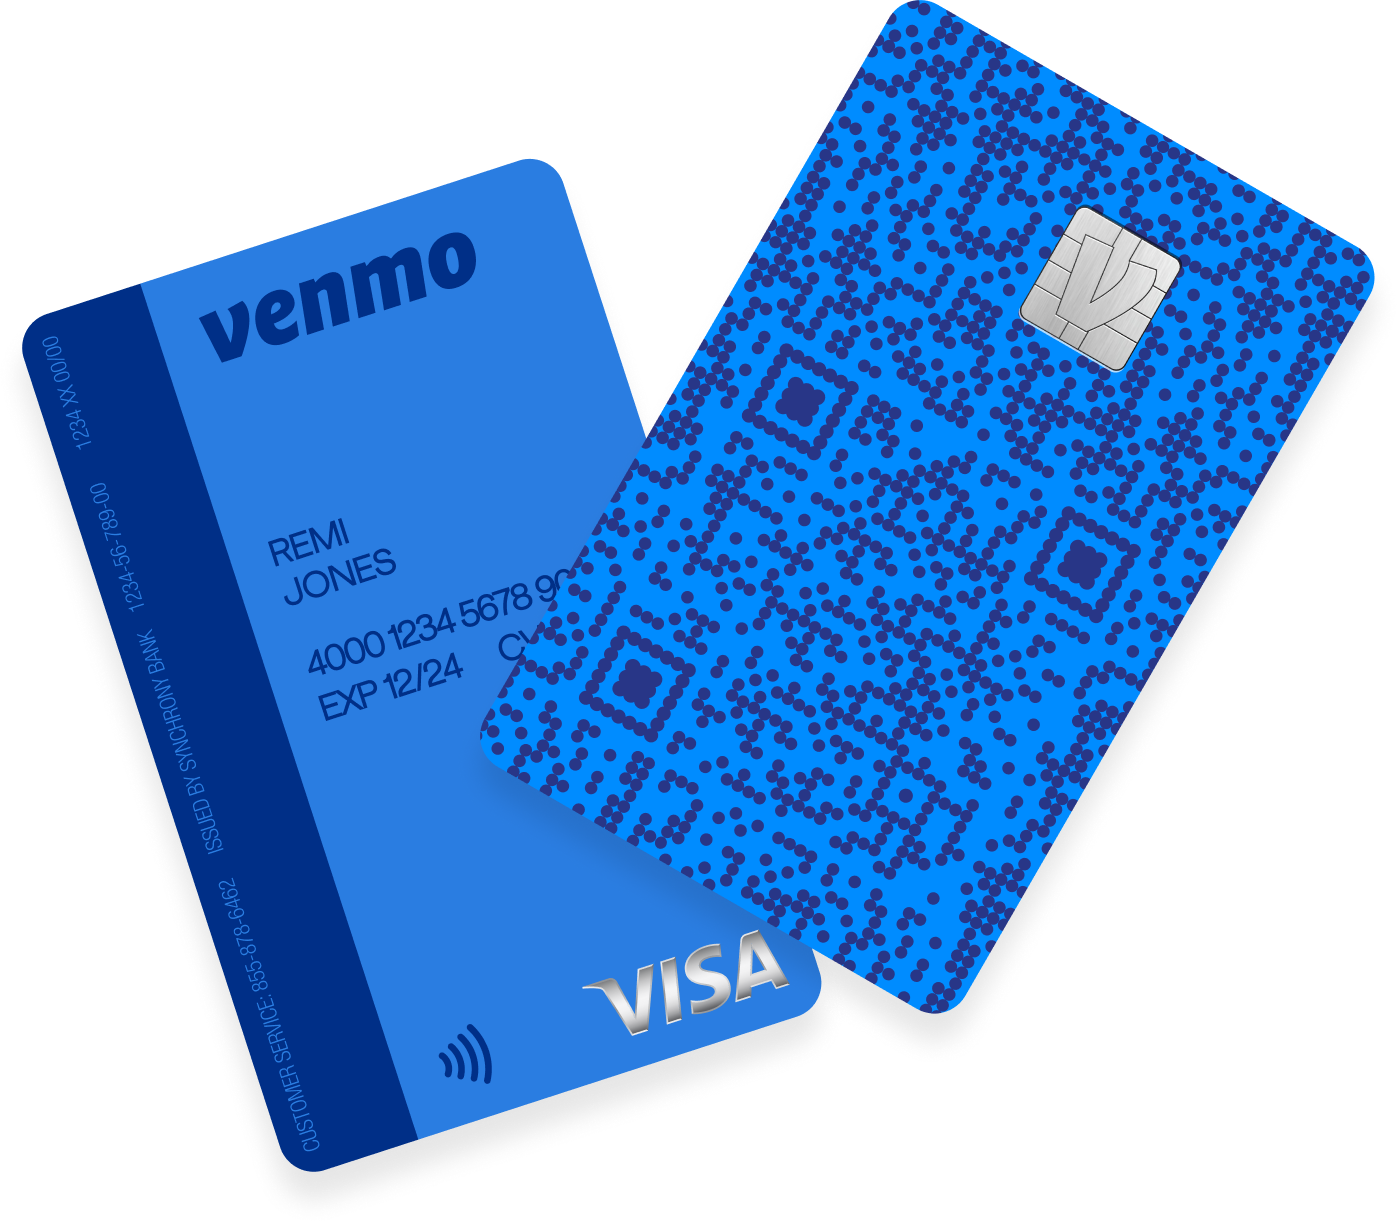 venmo card authorization failed